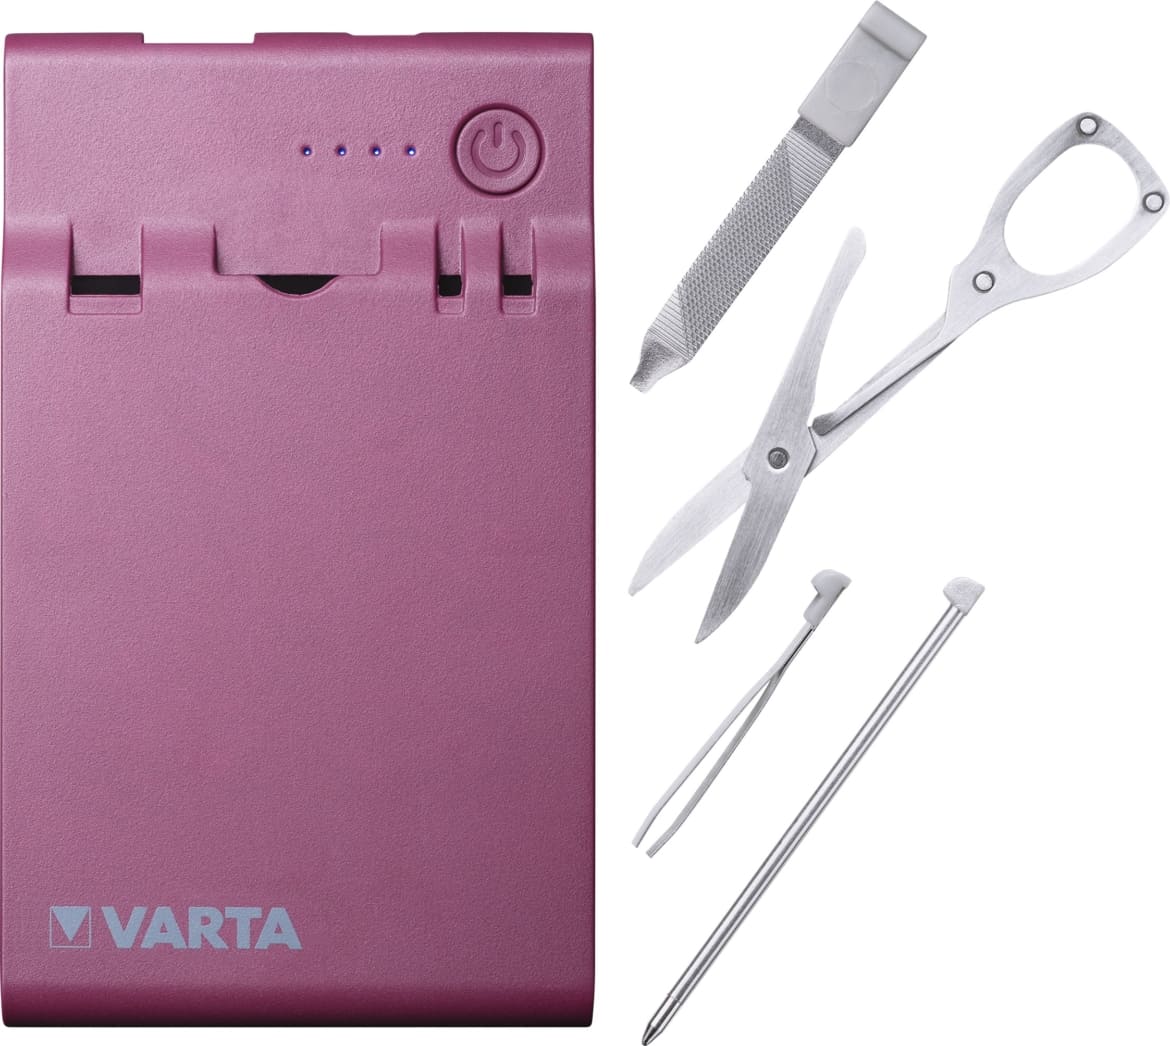 Multitool Power Bank di Varta, l'innovativo carica batterie col beauty kit!